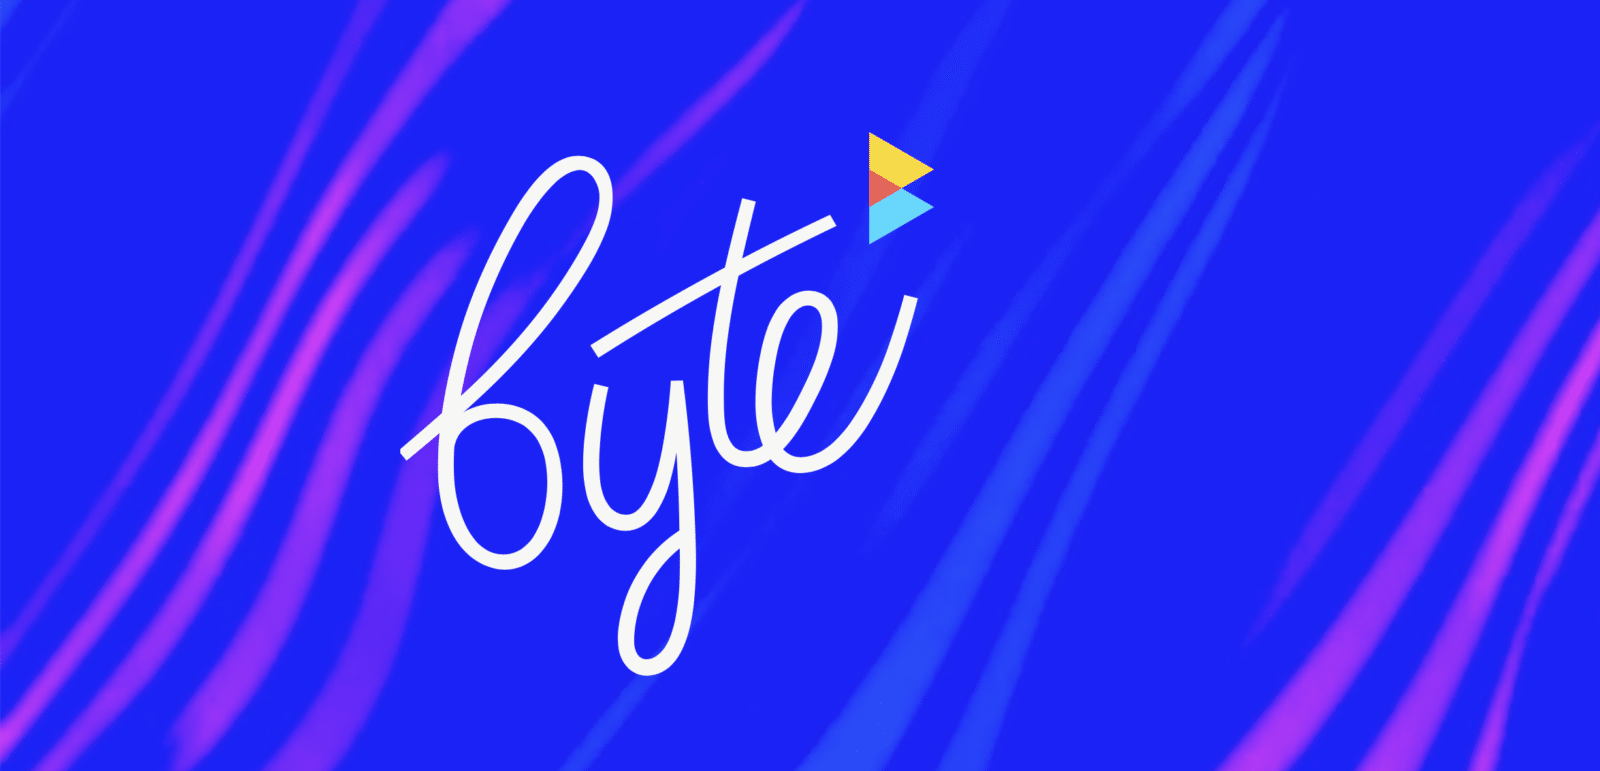 Vine กลับมาเกิดใหม่ในแอพชื่อ Byte โดยมี TikTok เป็นคู่แข่งสำคัญ